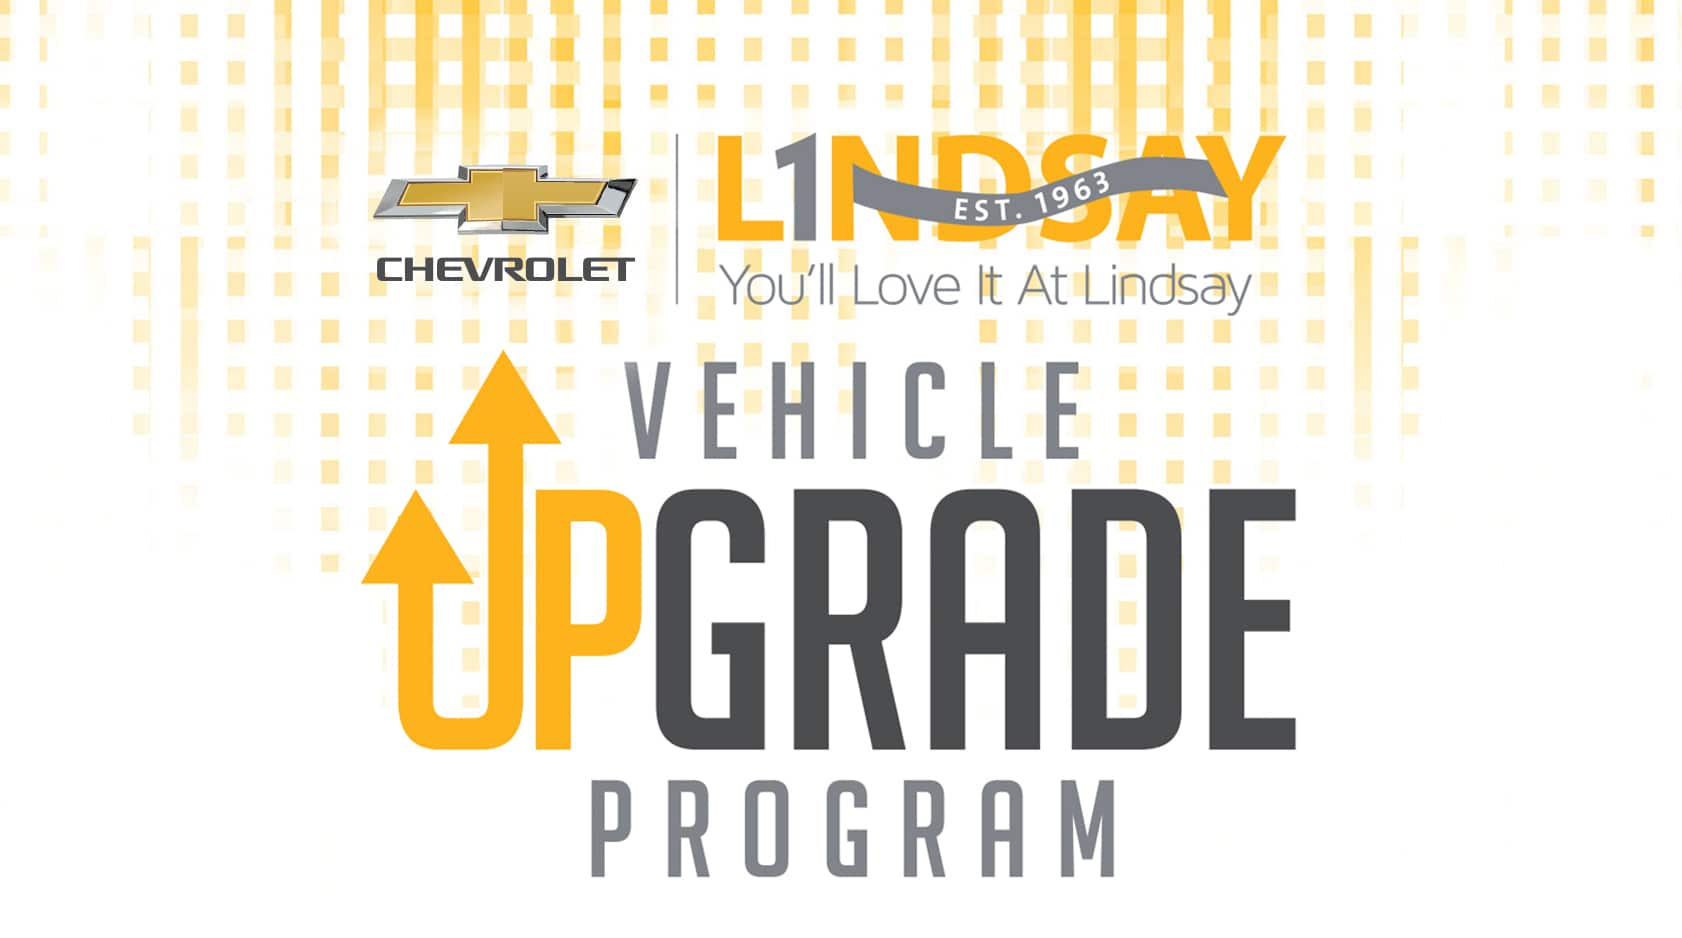 Lindsay Chevrolet in Woodbridge VA